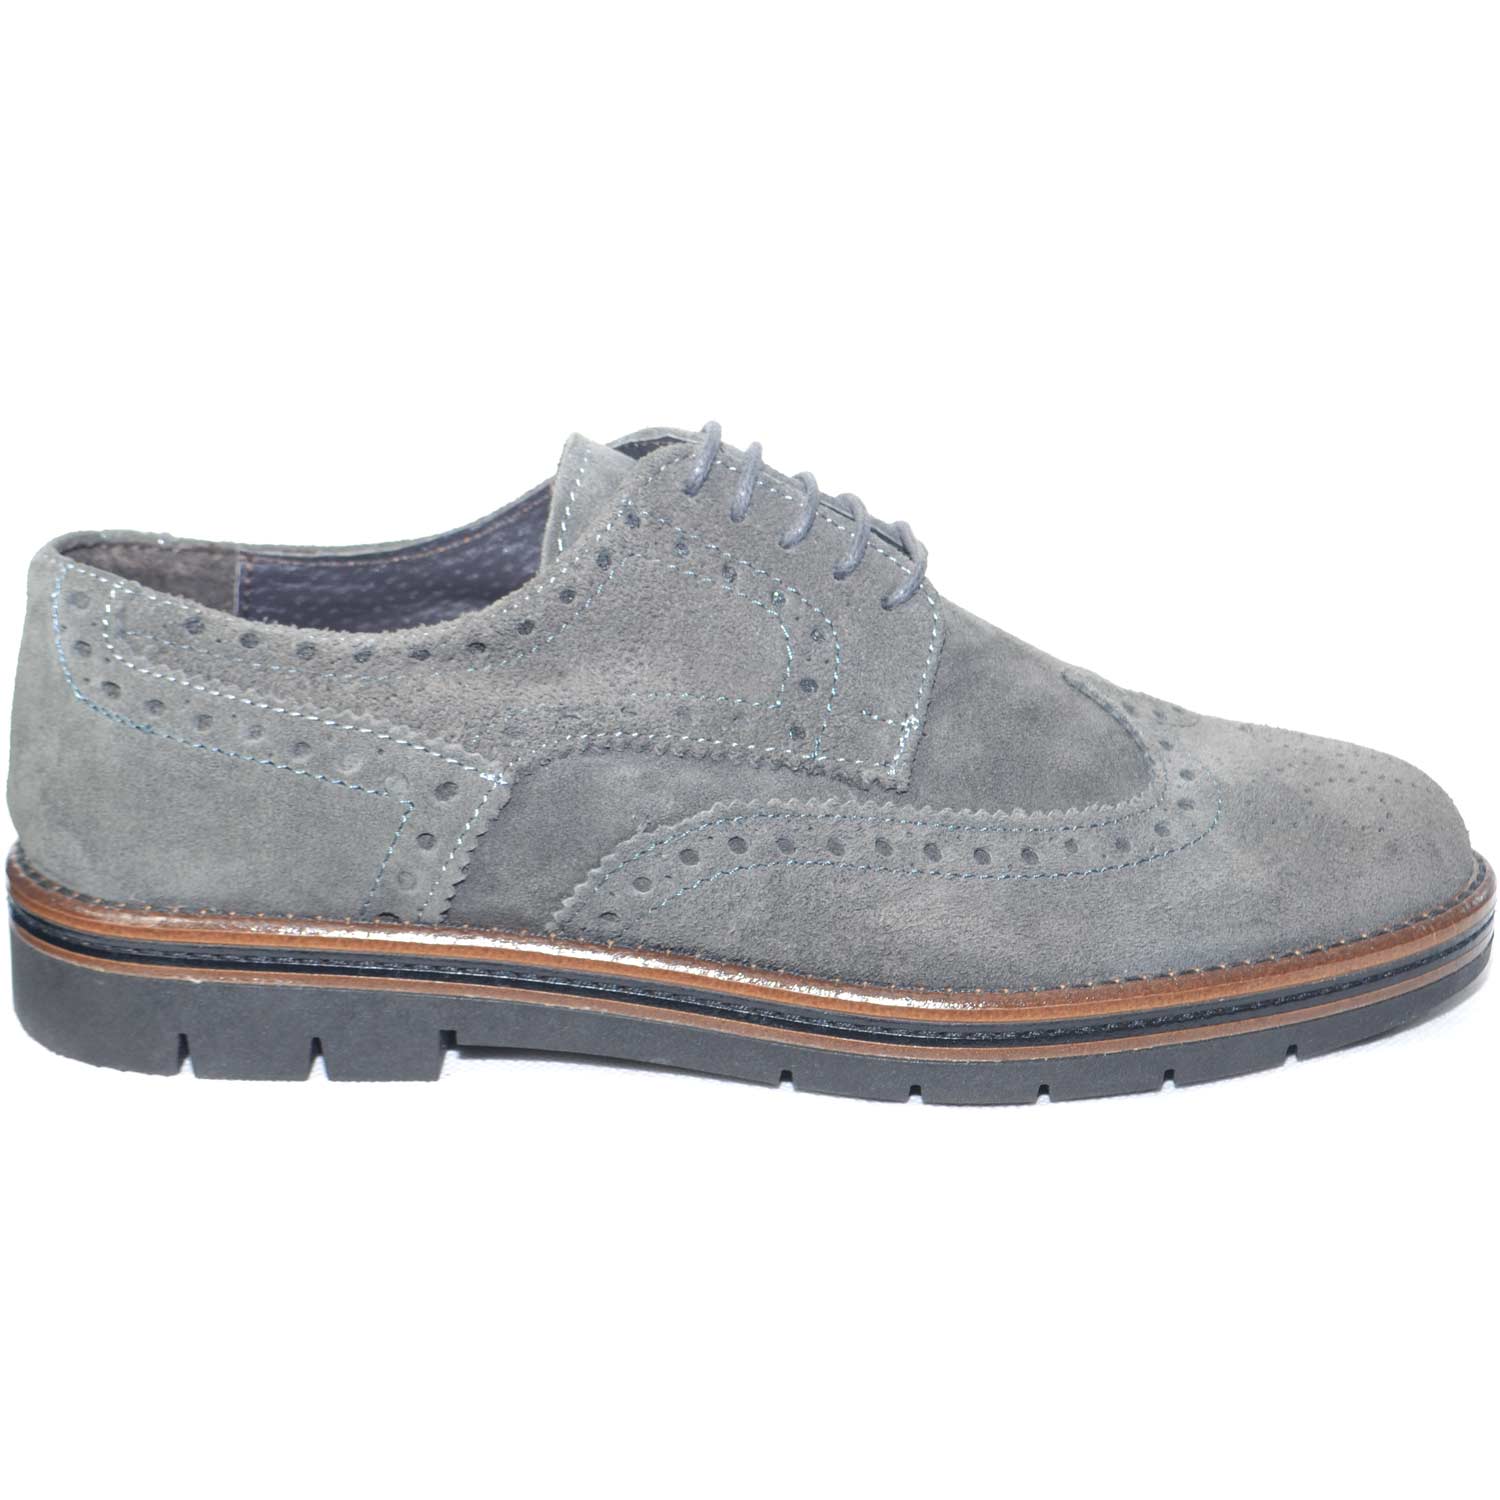 Calzature uomo scarpe francesine stringate uomo grigio fondo bicolore  antiscivolo made in italy moda comfort uomo stringate Malu Shoes | MaluShoes